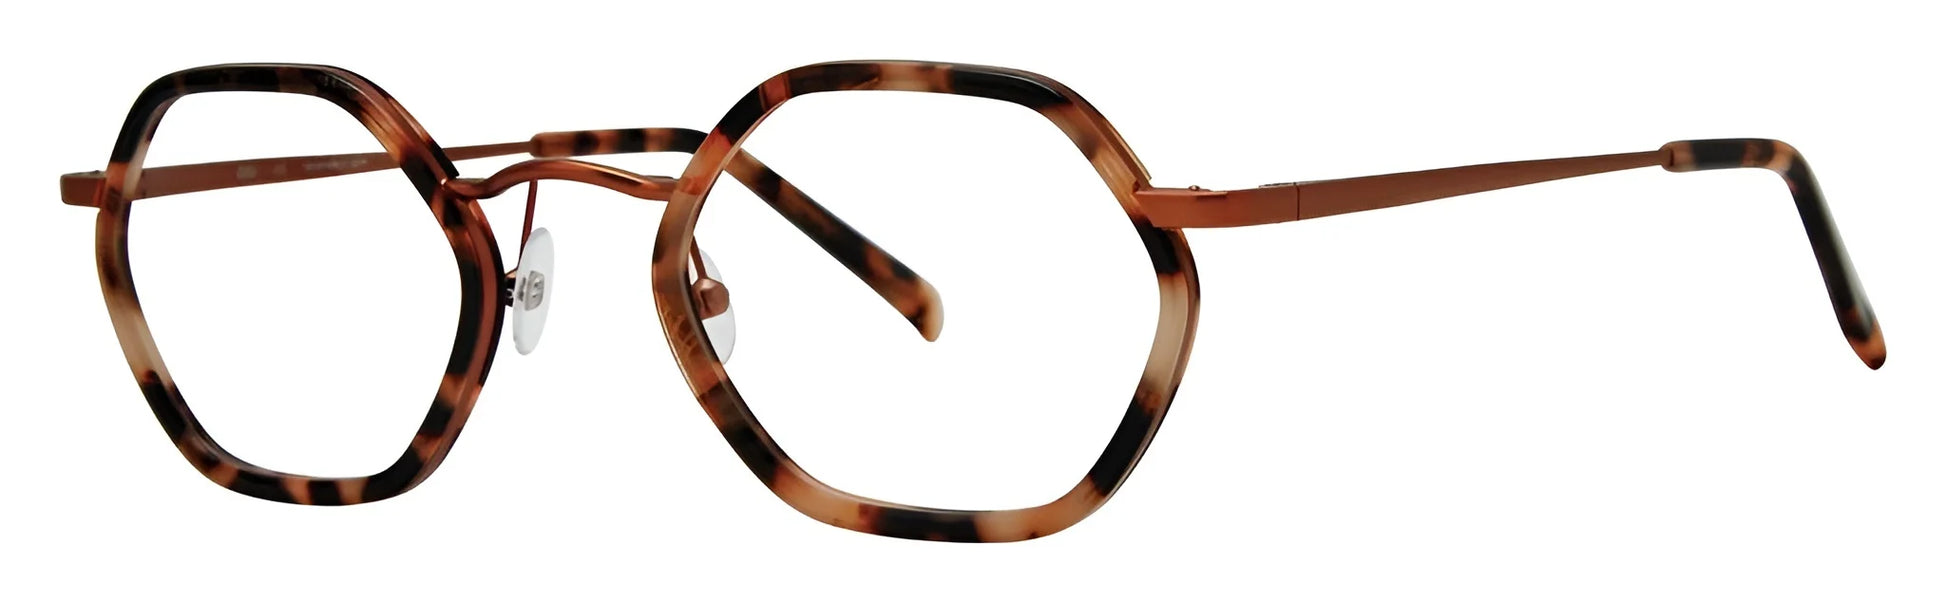 OGI WIND CHILL Eyeglasses Copper Apricot Tortoise